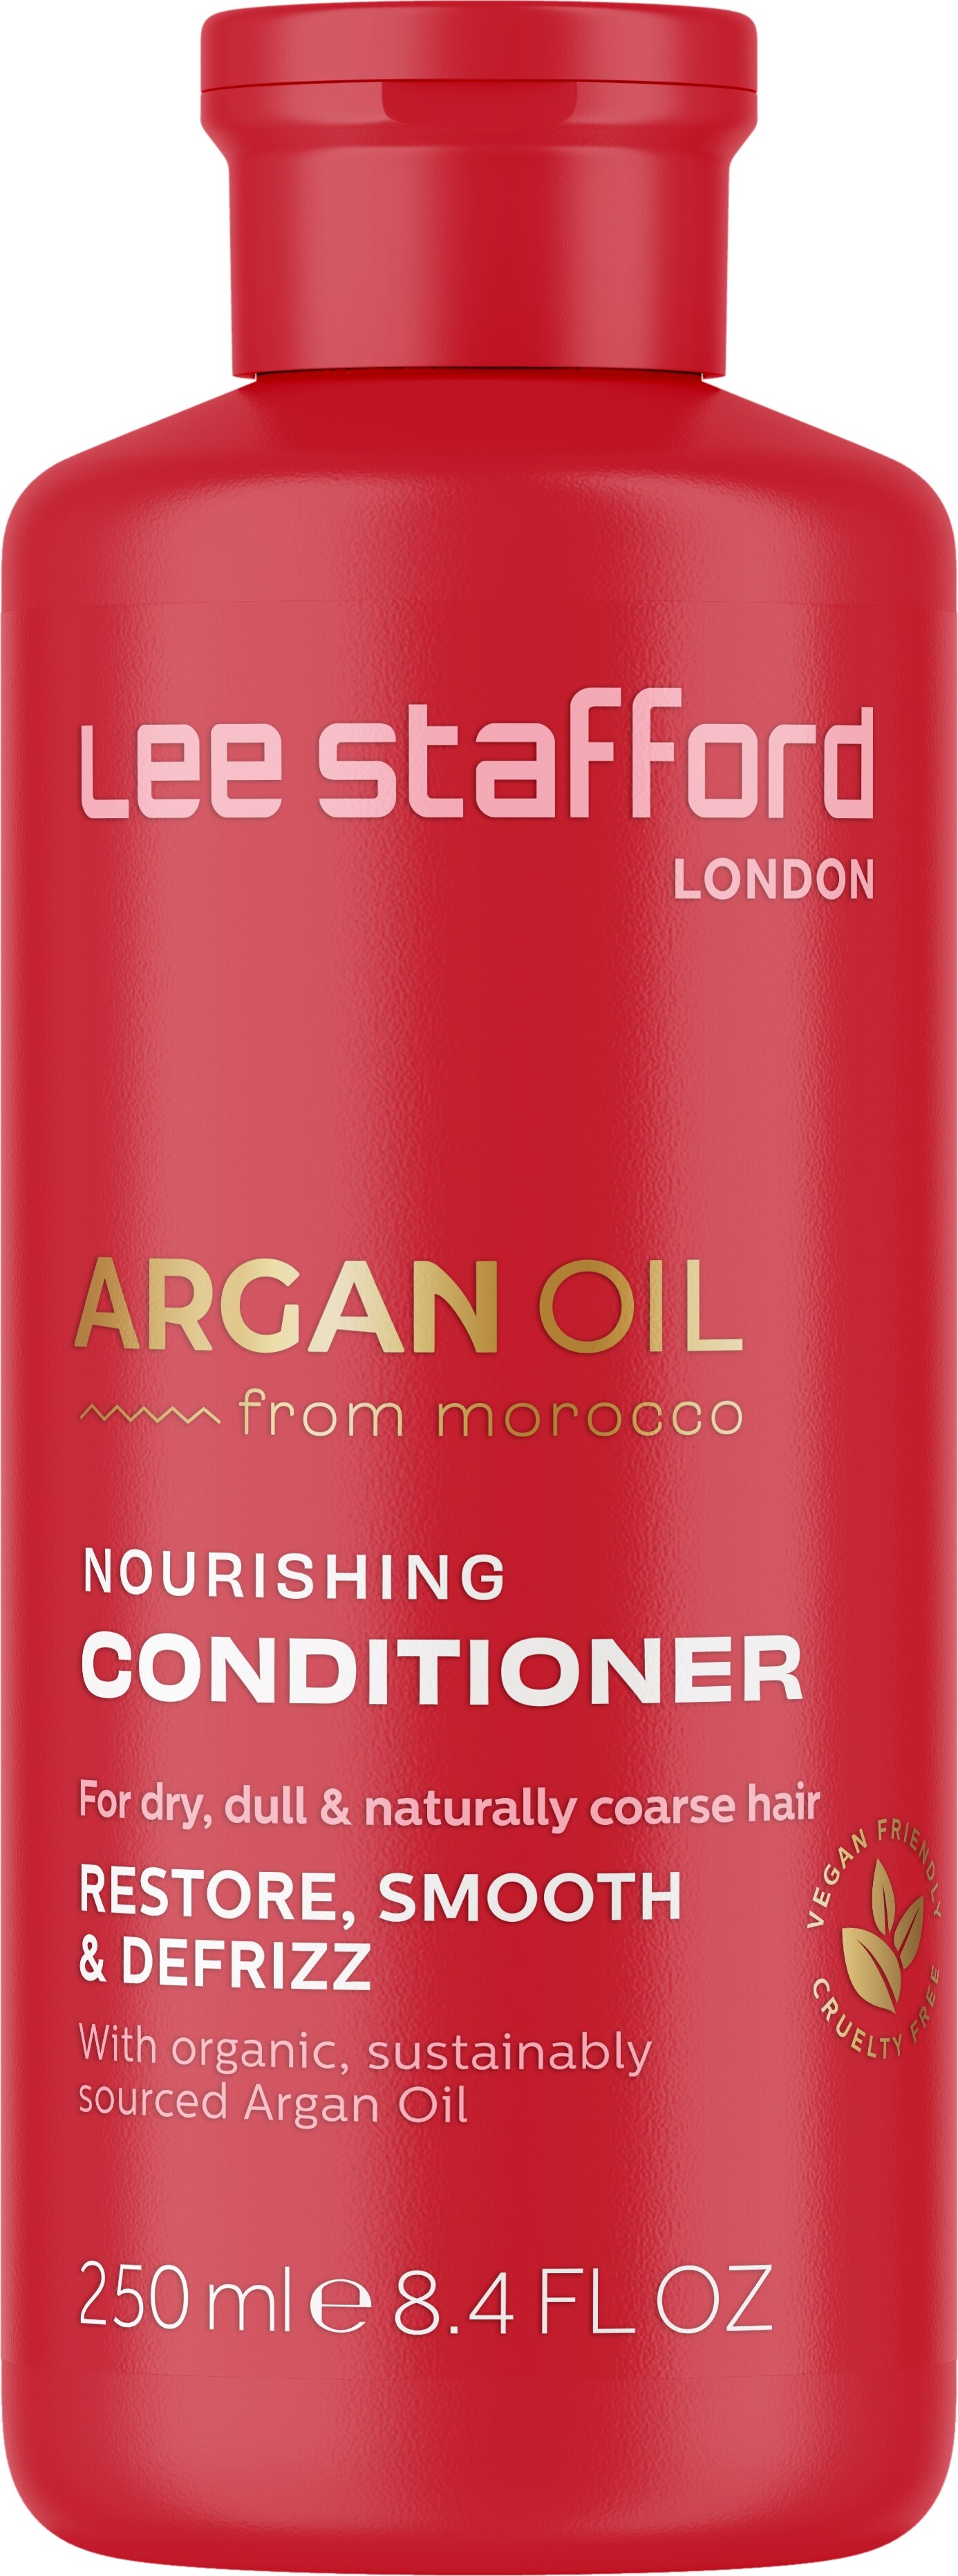 Se Lee Stafford - Argan Oil Nourishing Conditioner - 250 Ml hos Gucca.dk